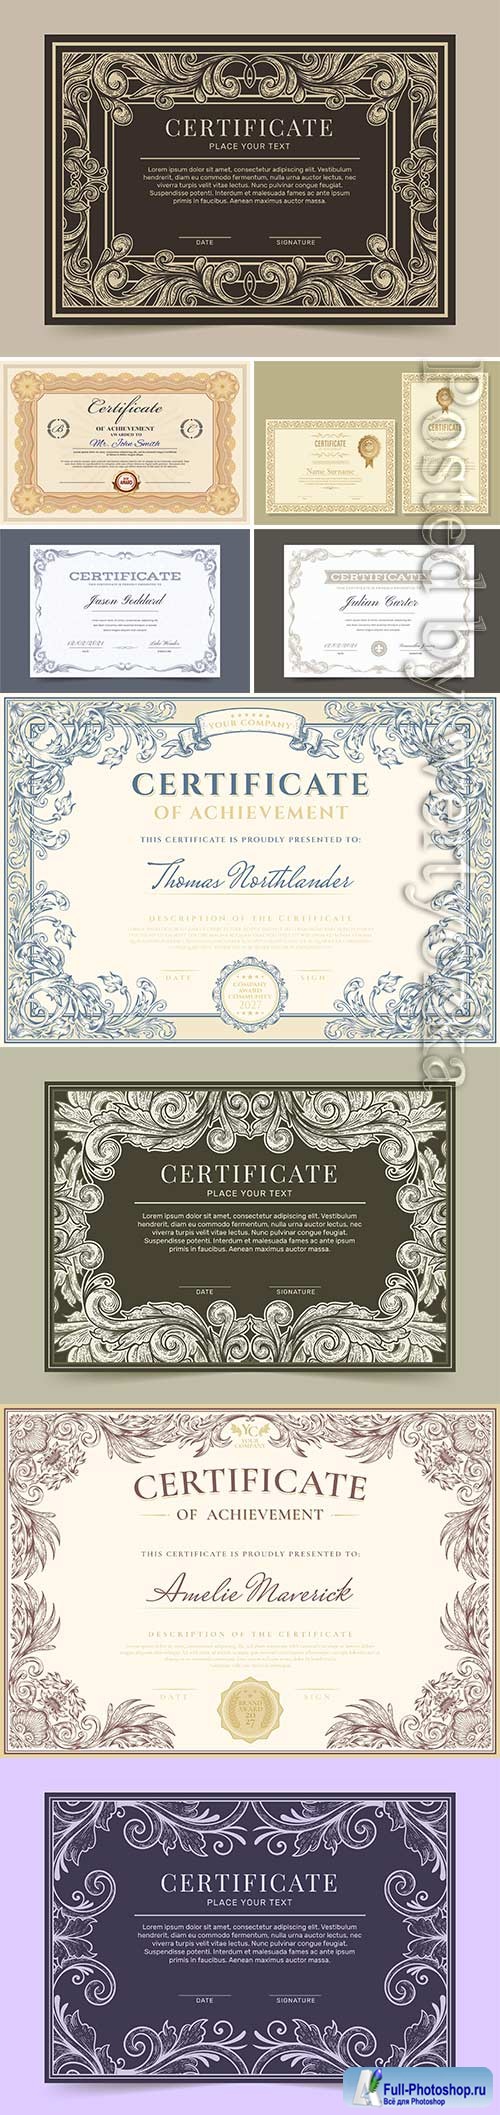 Engraving hand drawn ornamental certificate template